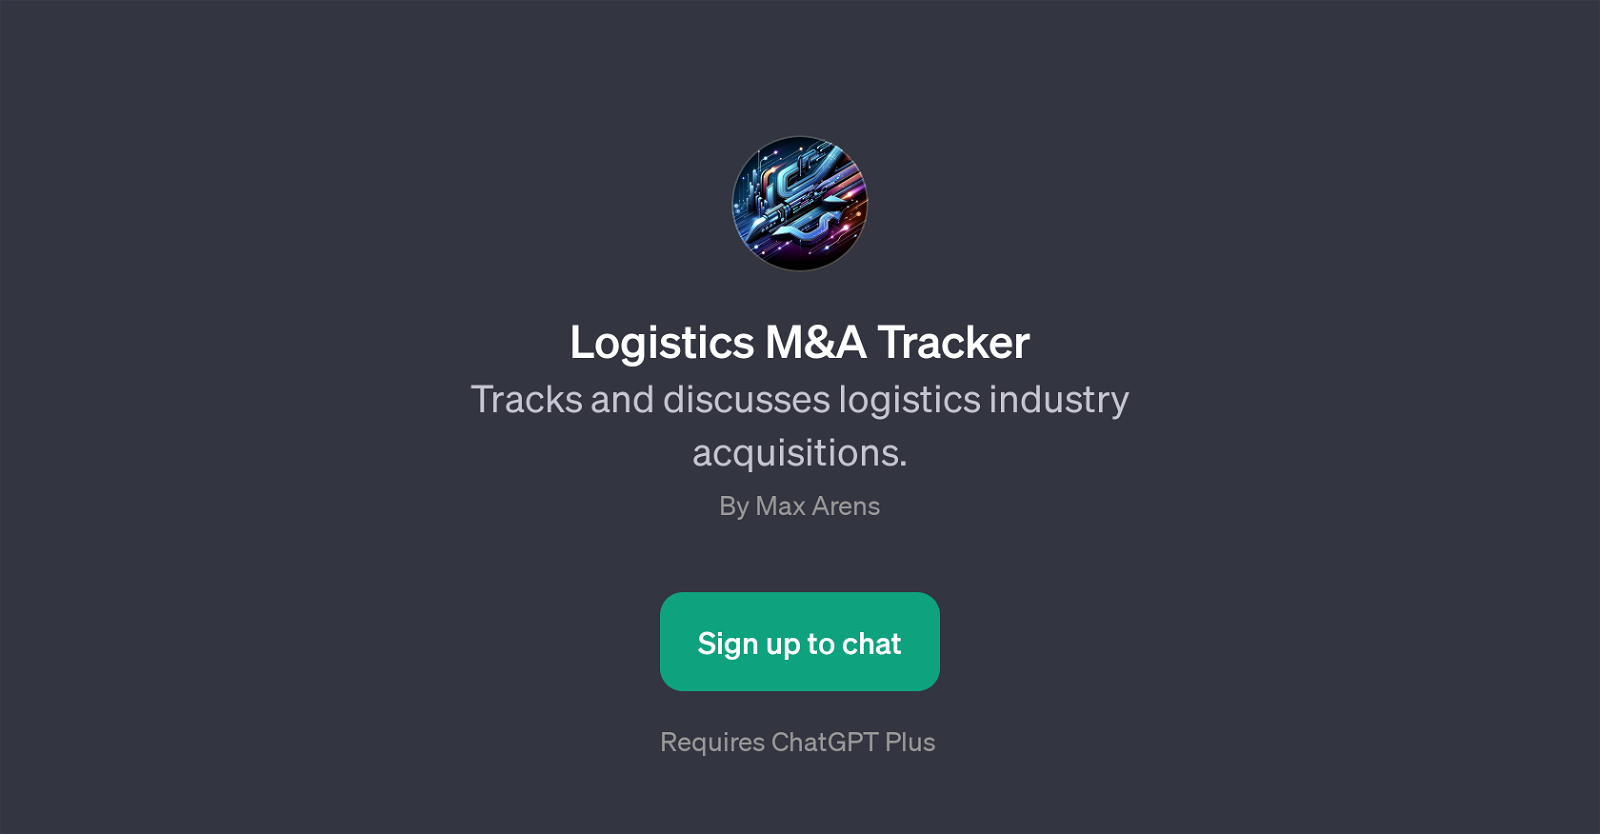 Logistics M&A Tracker website